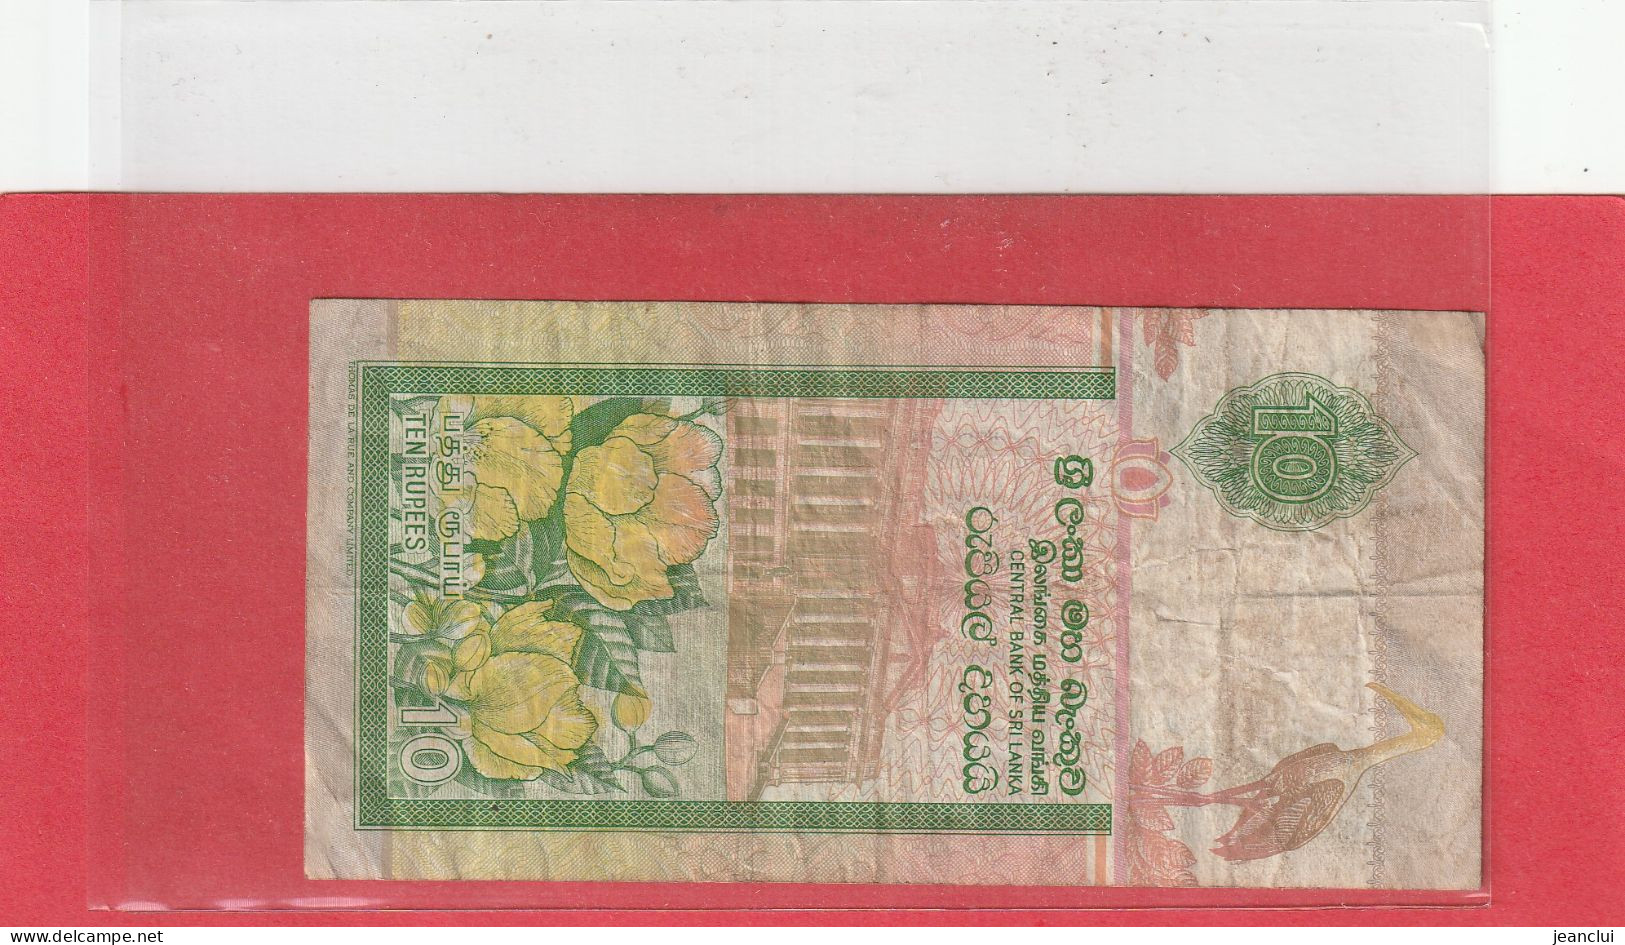 CENTRAL BANK OF SRI LANKA   .  10 RUPEES  .  15-11-1995  .  N°   M/149 974118 .  2 SCANNES  .  BILLET USITE - Sri Lanka